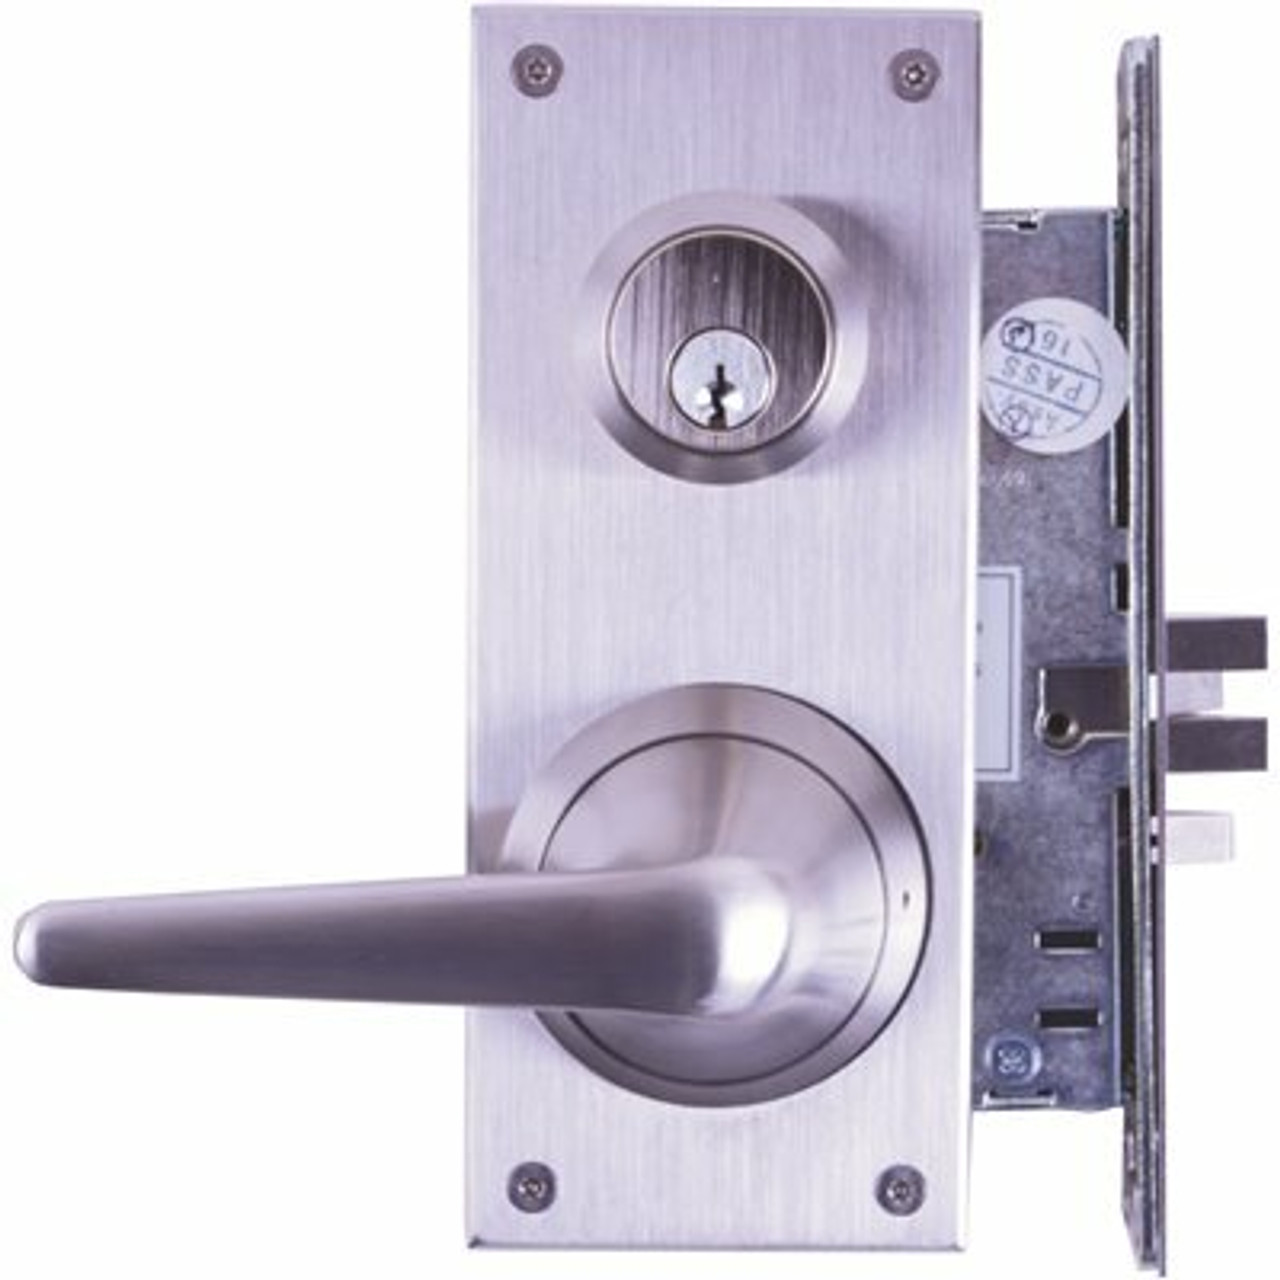 Townsteel Mrxe Series Ligature Resistant Stainless Steel Mortise Lock Escutcheon Lever Trim - 309069020